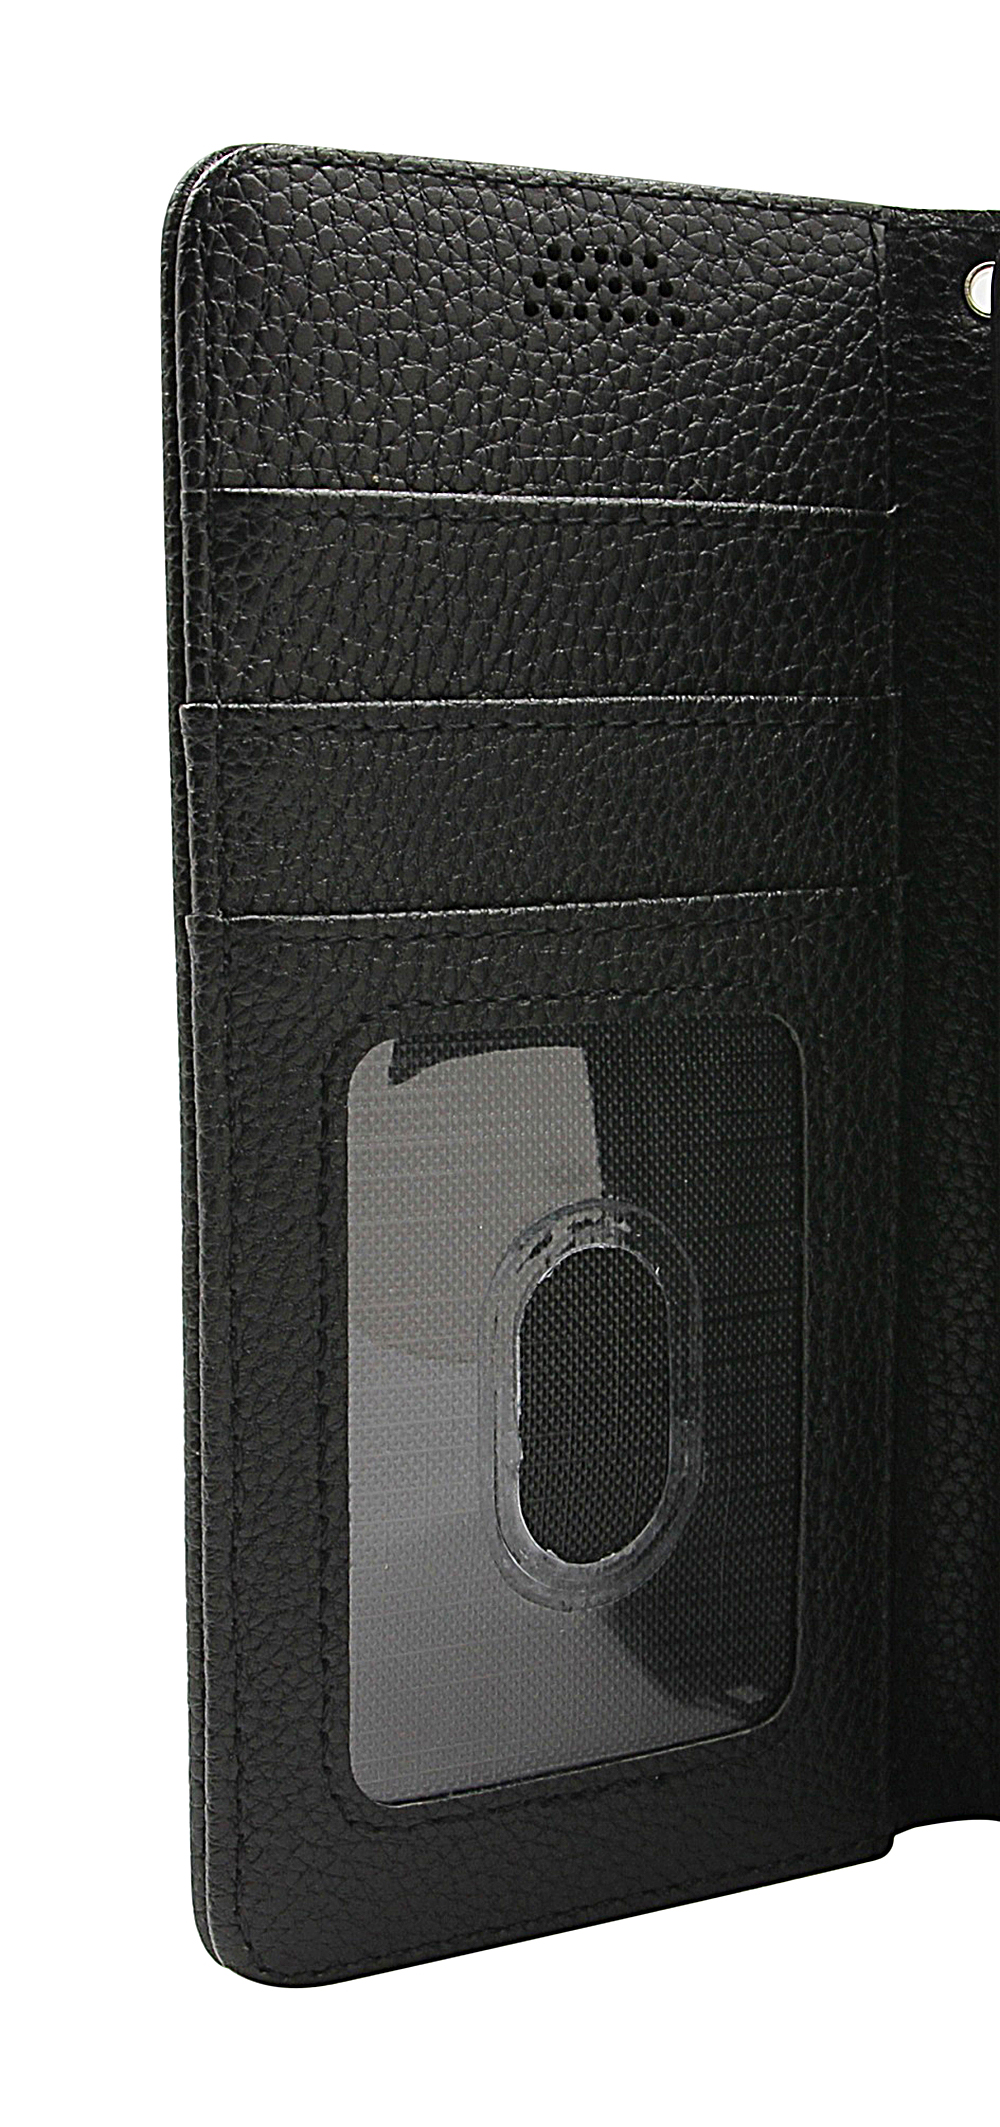 New Standcase Wallet Motorola Moto G9 Plus